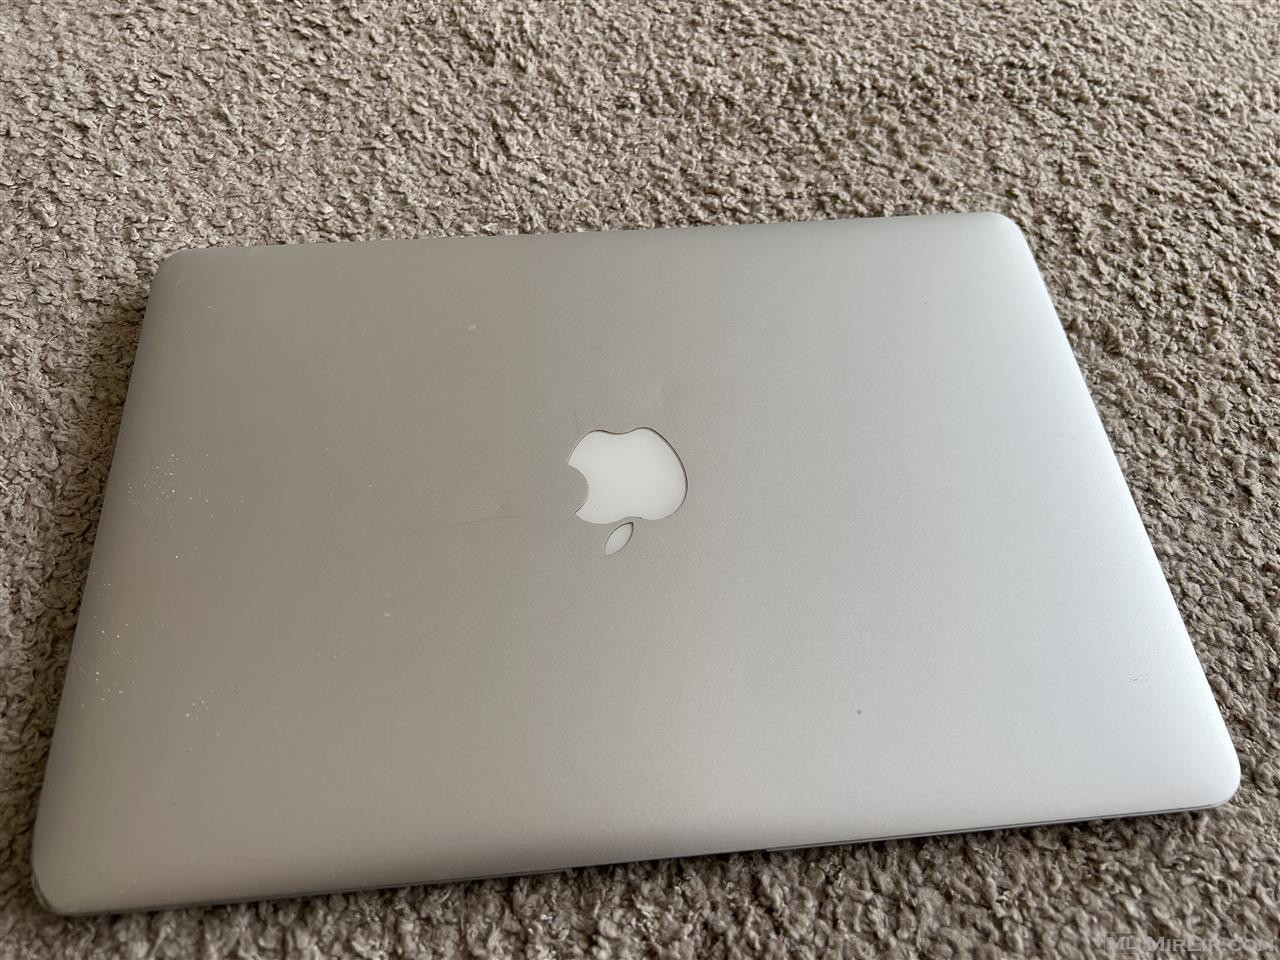 Shes MacBook Air 13 inch 1.6 ghz